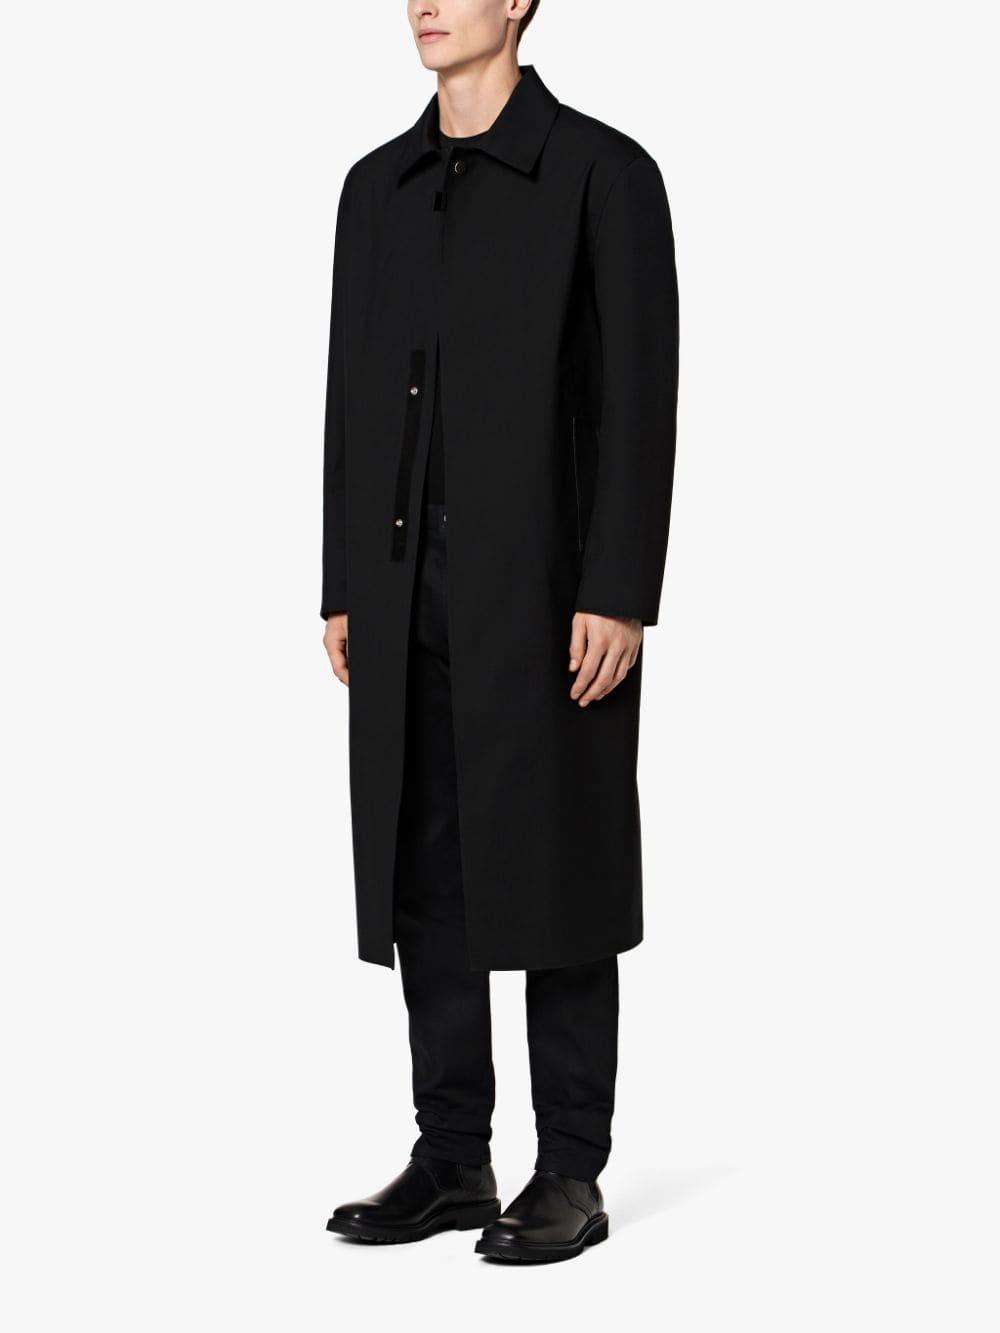 Mackintosh 1017 Alyx 9sm Black Bonded Wool Formal Coat for Men - Lyst